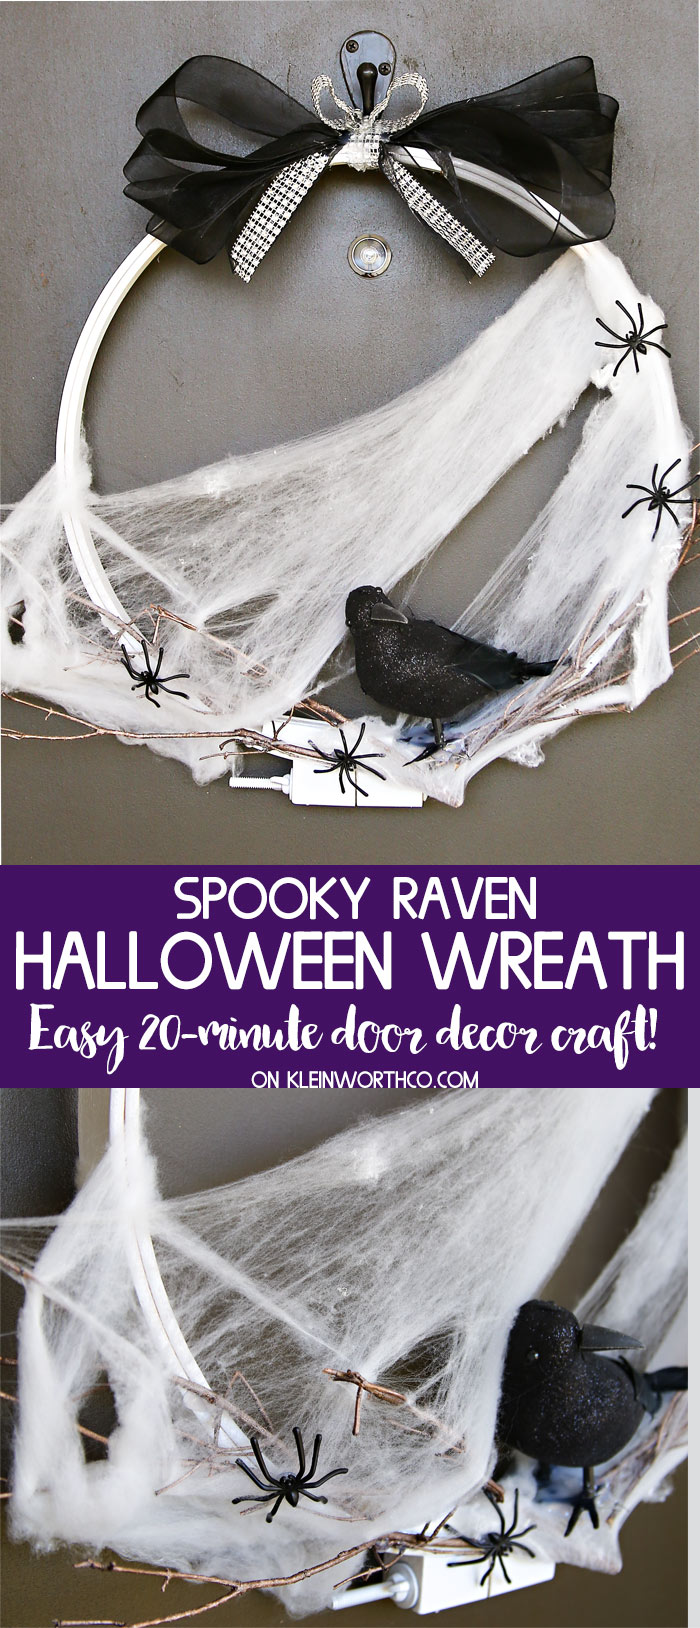 Spooky Raven Halloween Wreath craft idea